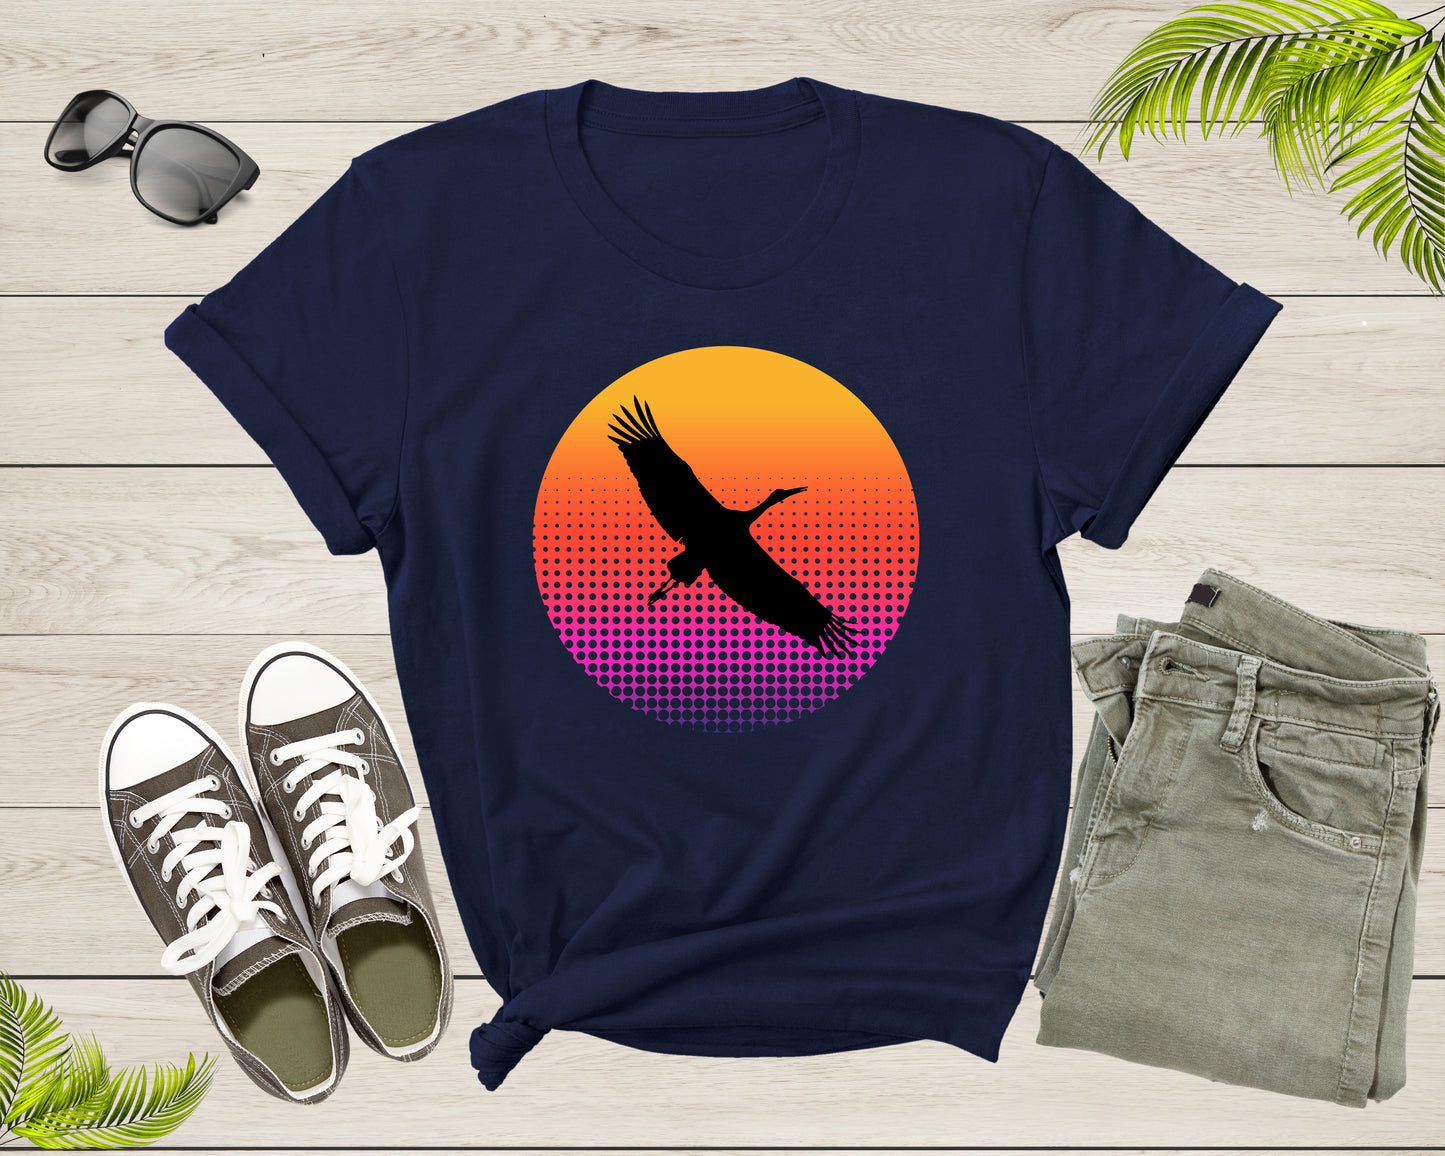 Stork Heron Bird Flying at Sunset Over Sea Beautiful Animal T-Shirt Heron Bird Lover Gift T Shirt for Men Women Kids Boys Girls Teens Tshirt